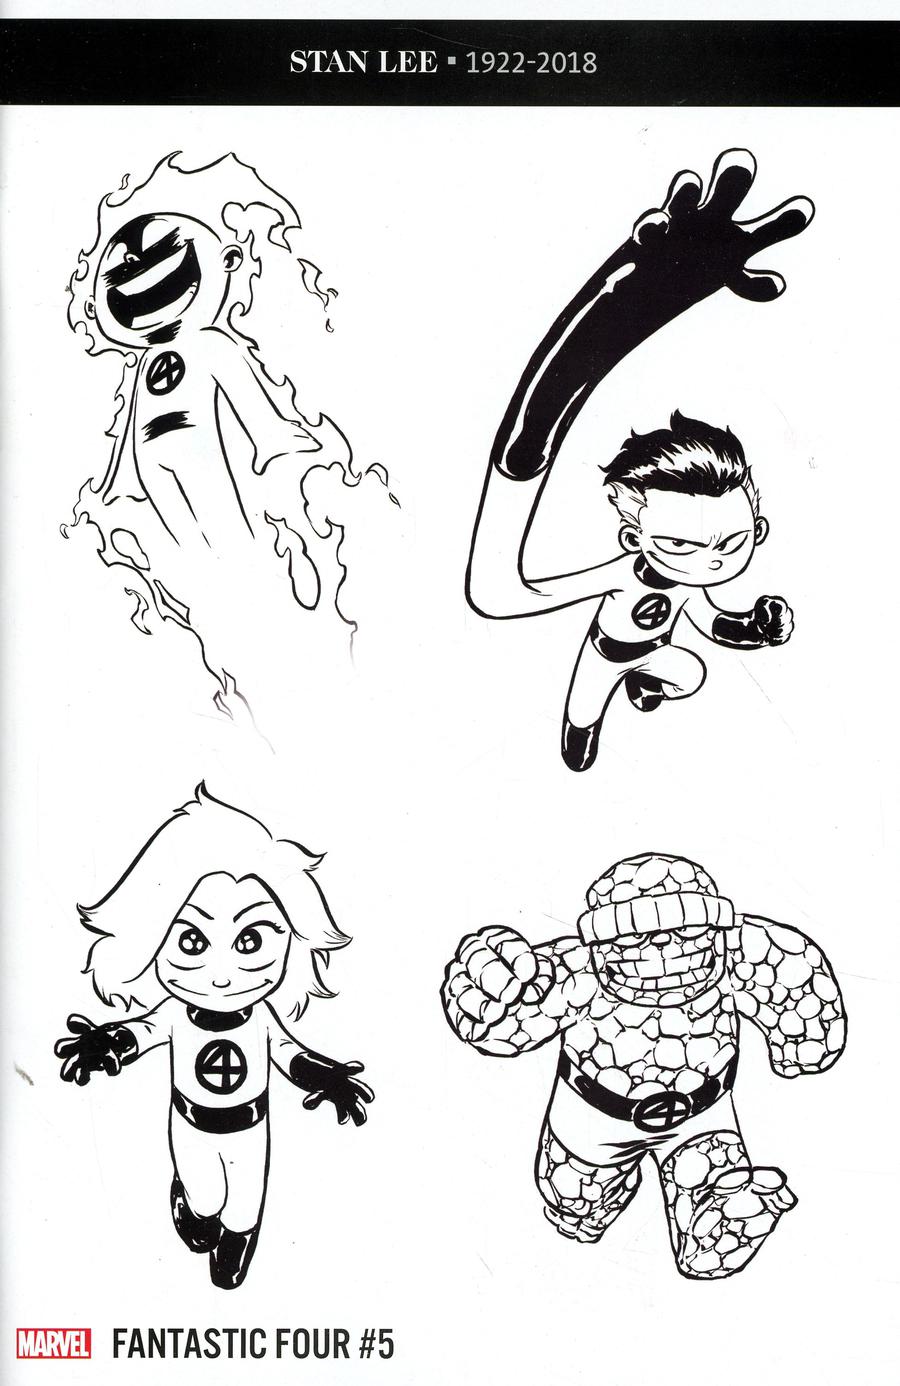 Fantastic Four #5 Party Sketch Variant (2018)